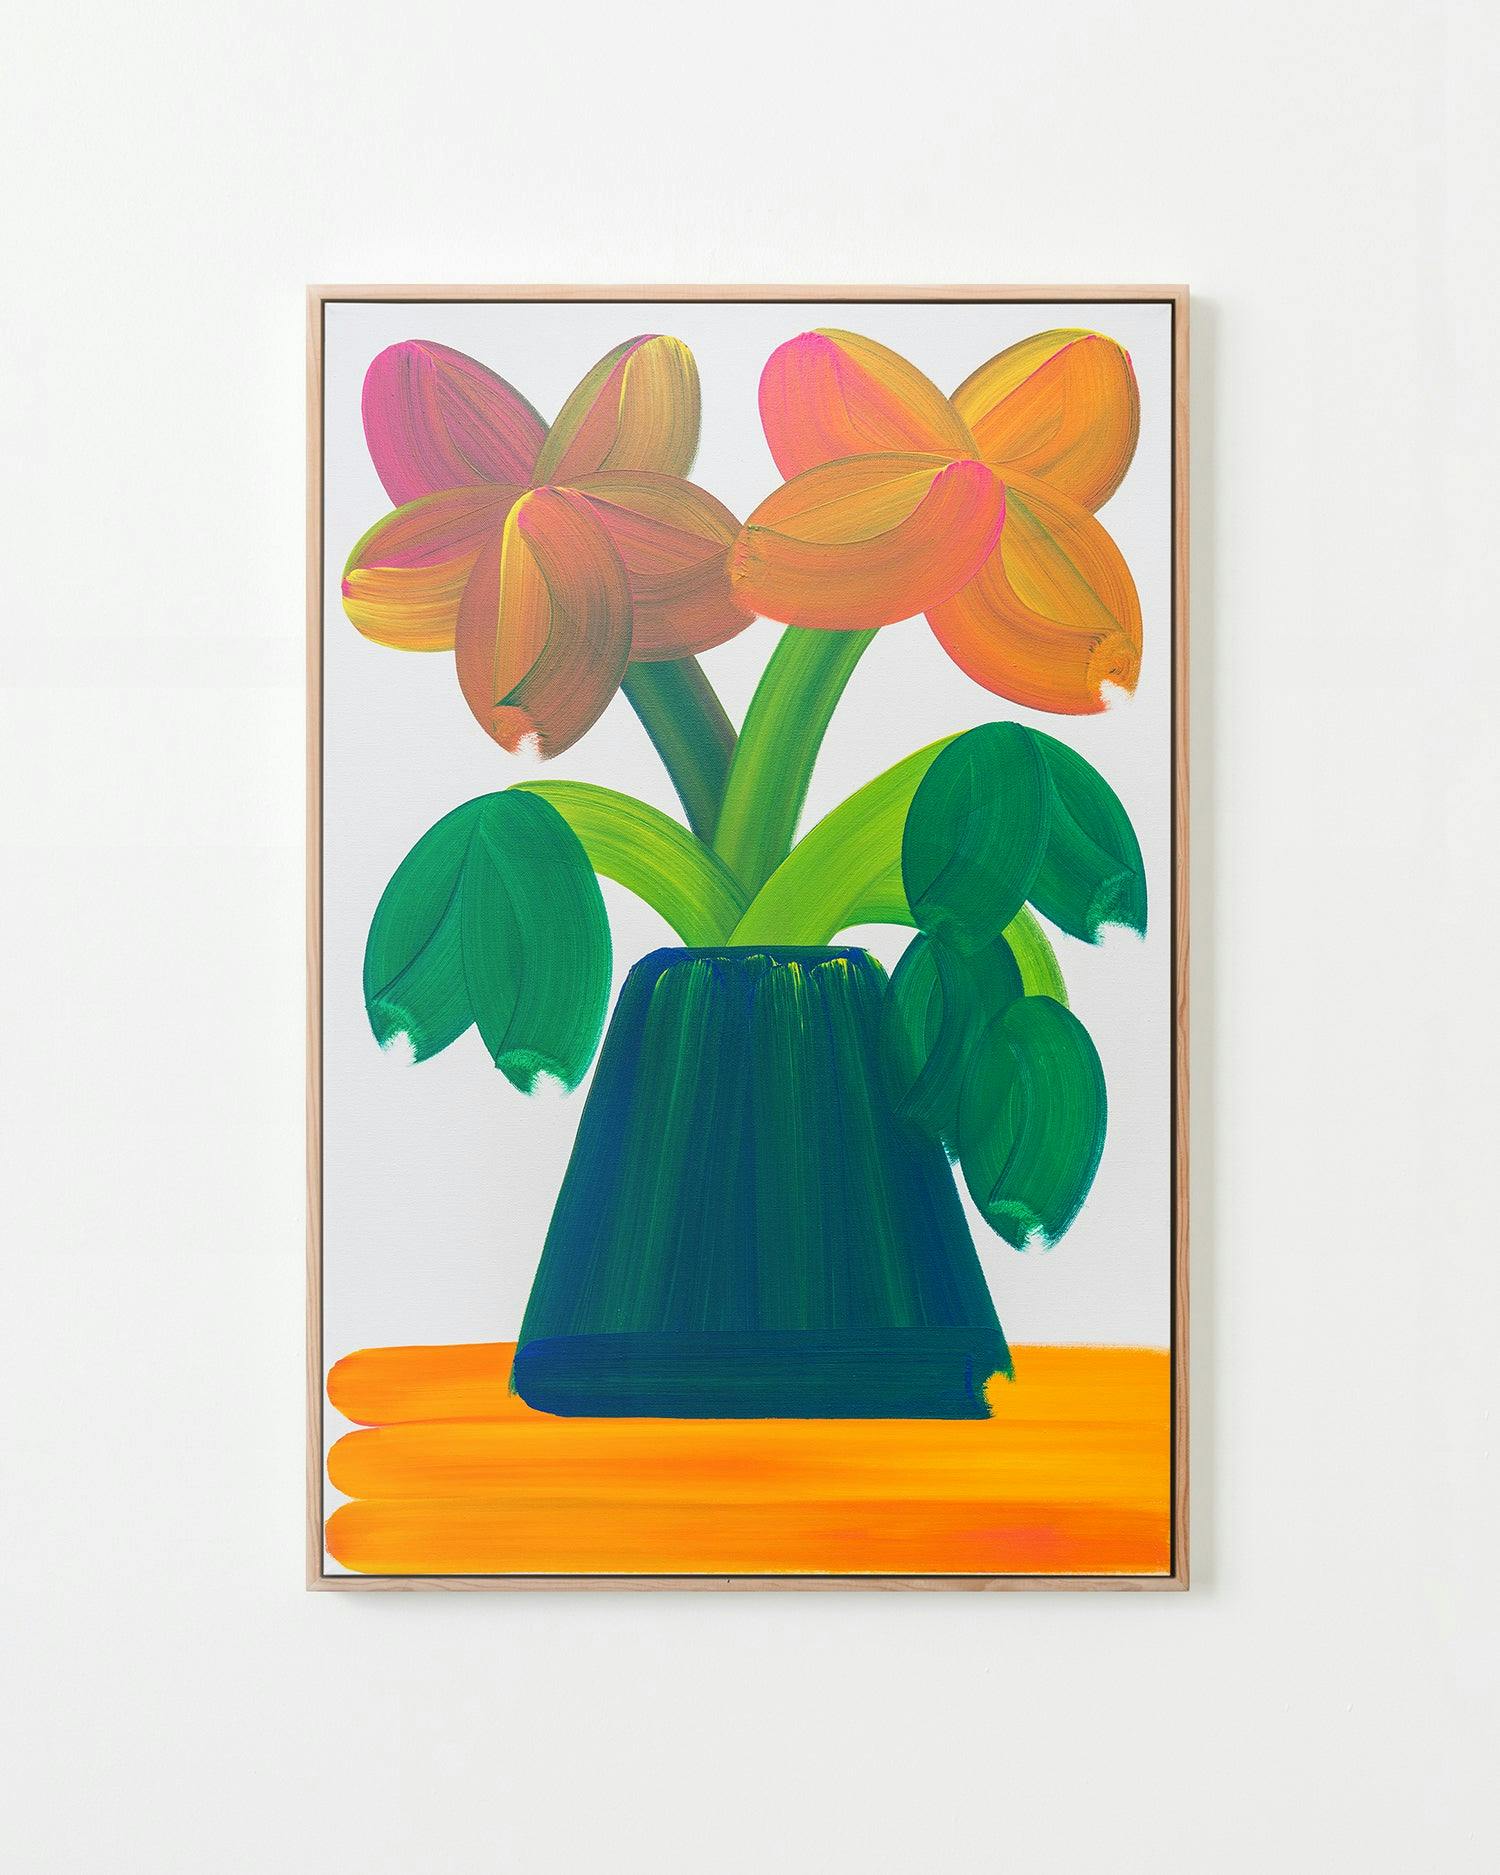 Painting by Erin D. Garcia titled "Orange Flowers, Blue Vase".